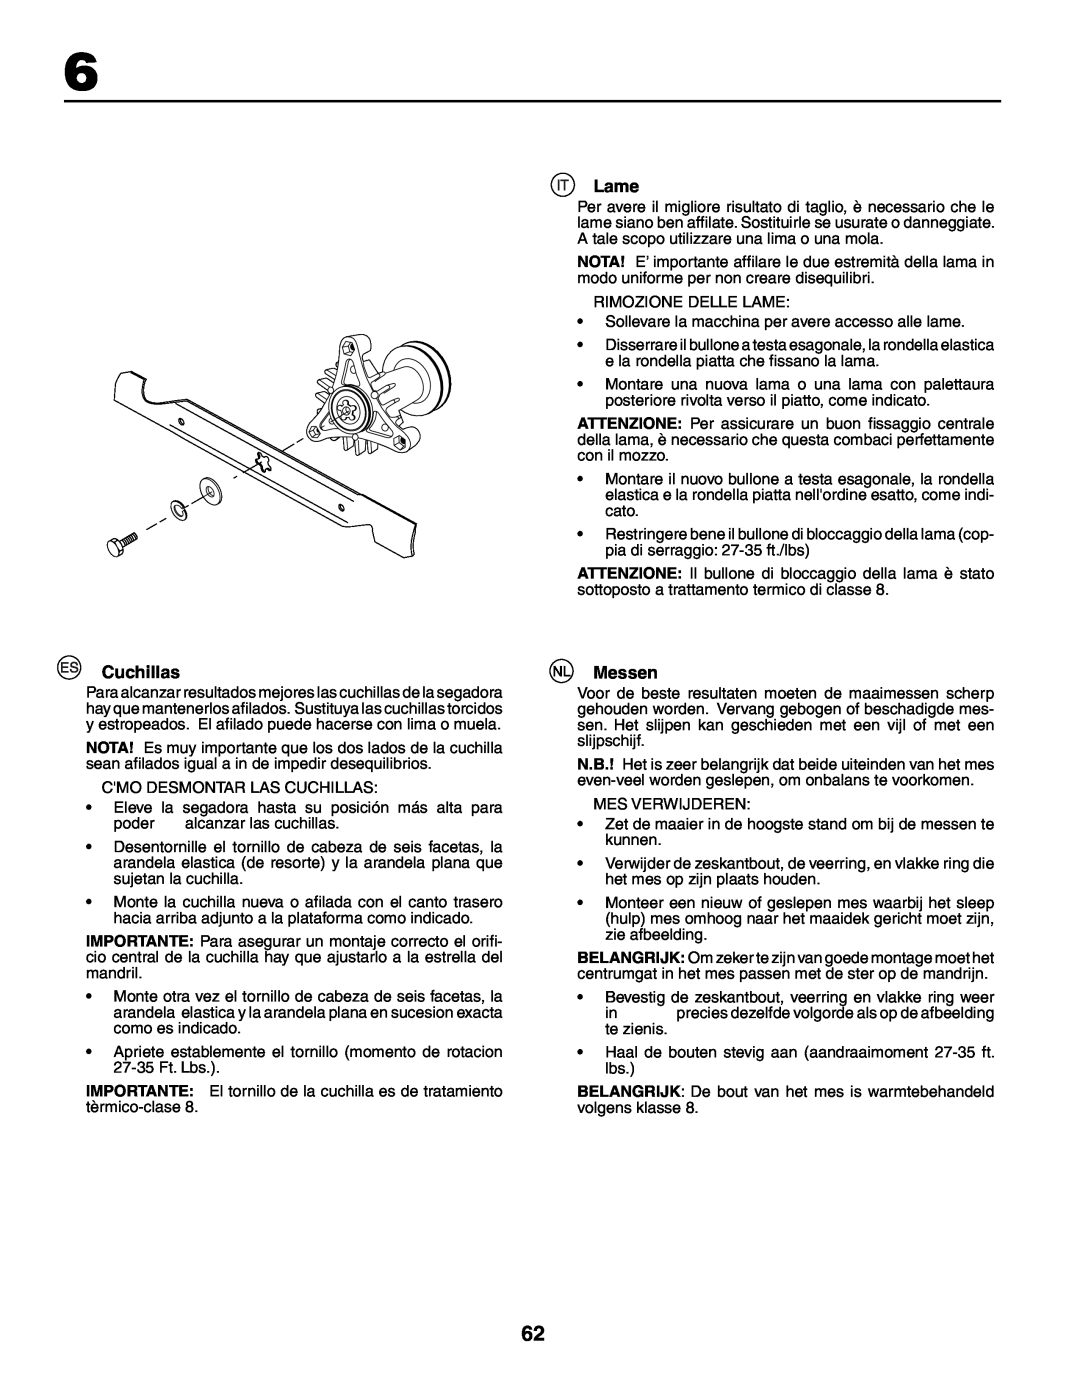 Husqvarna YTH210XP instruction manual Cuchillas, Lame, Messen 